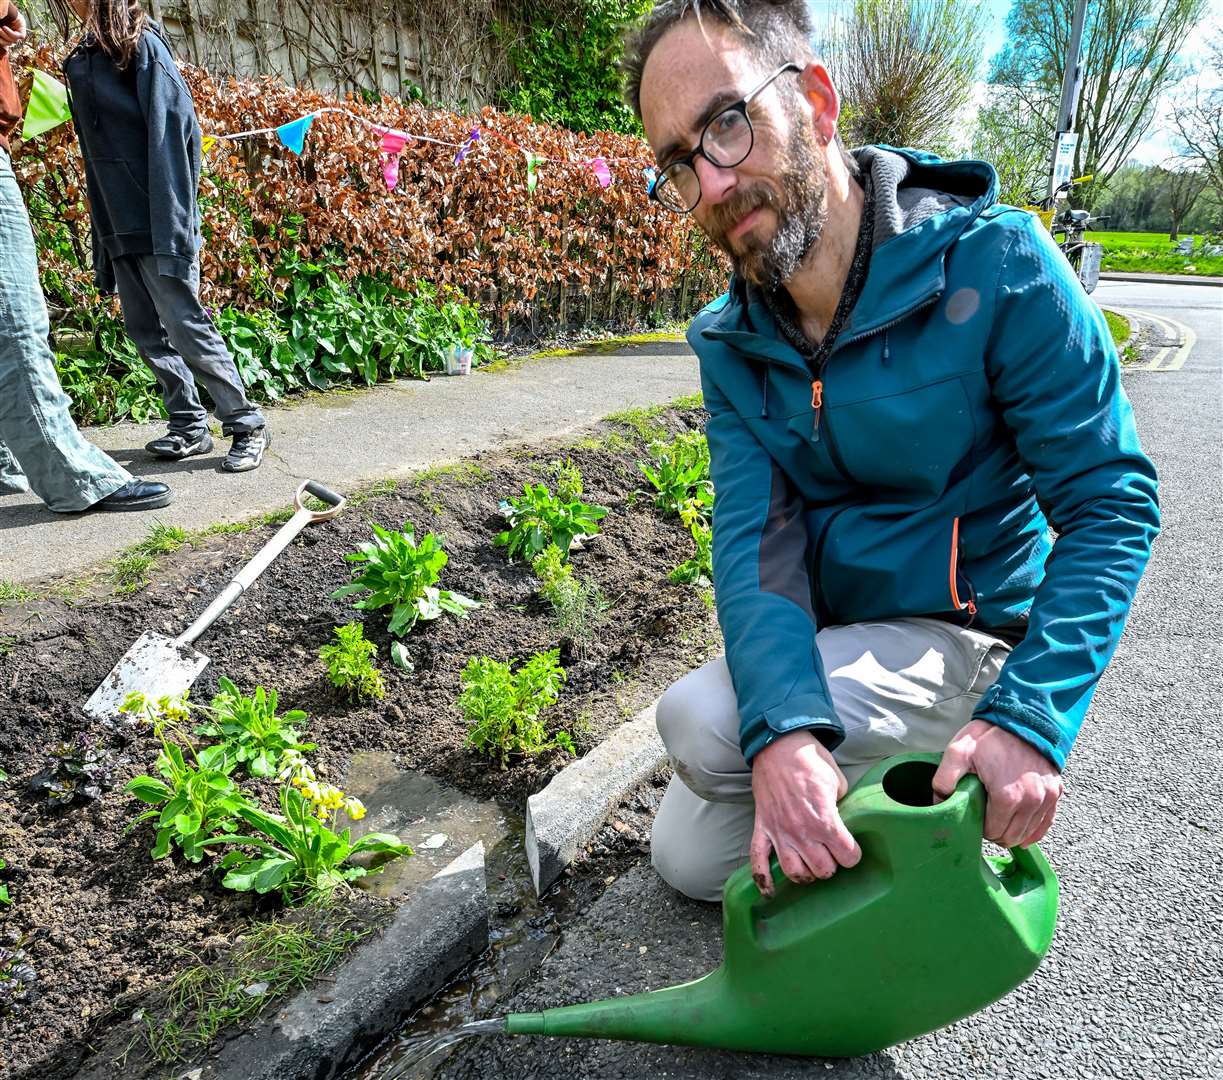 Water Sensitive Cambridge sets up first retrofitted roadside rain gardens in Cambridge